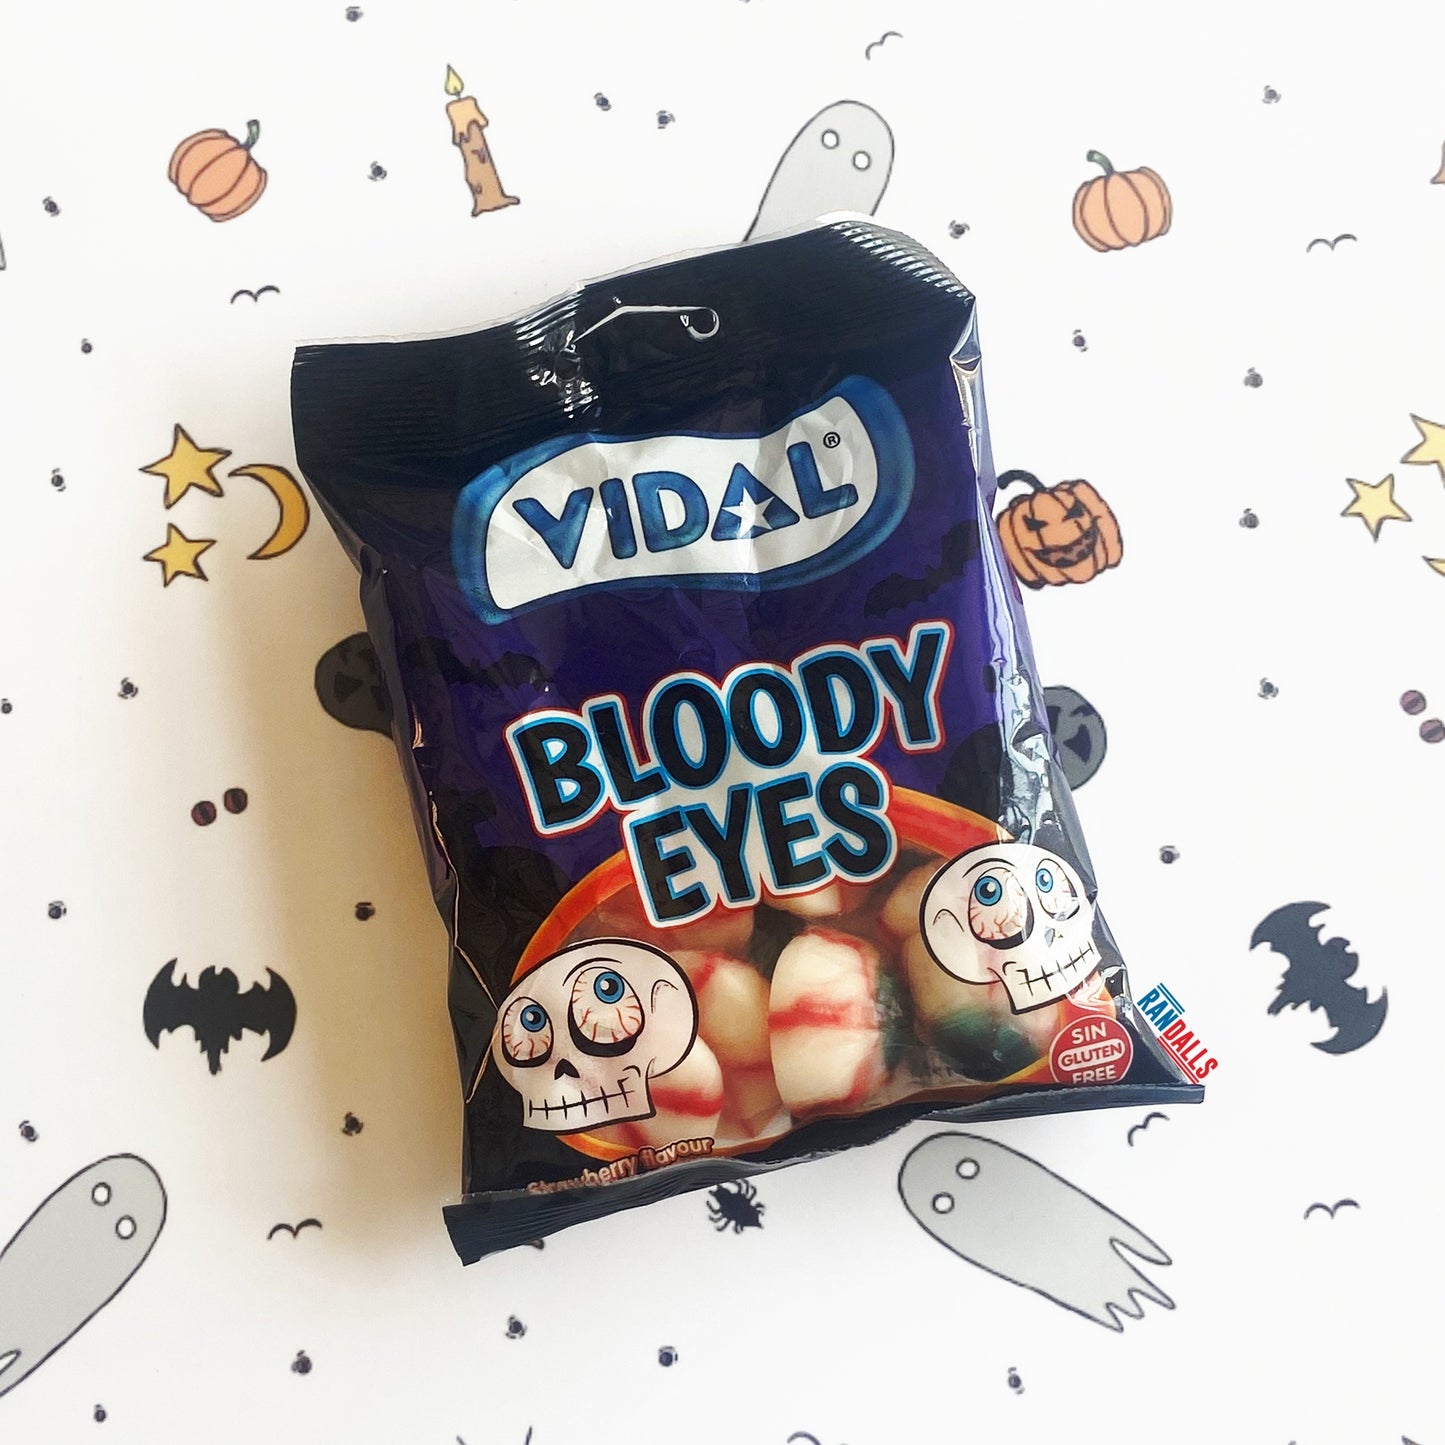 vidal bloody eyes, vidal spain, halloween candy, gluten free, randalls,